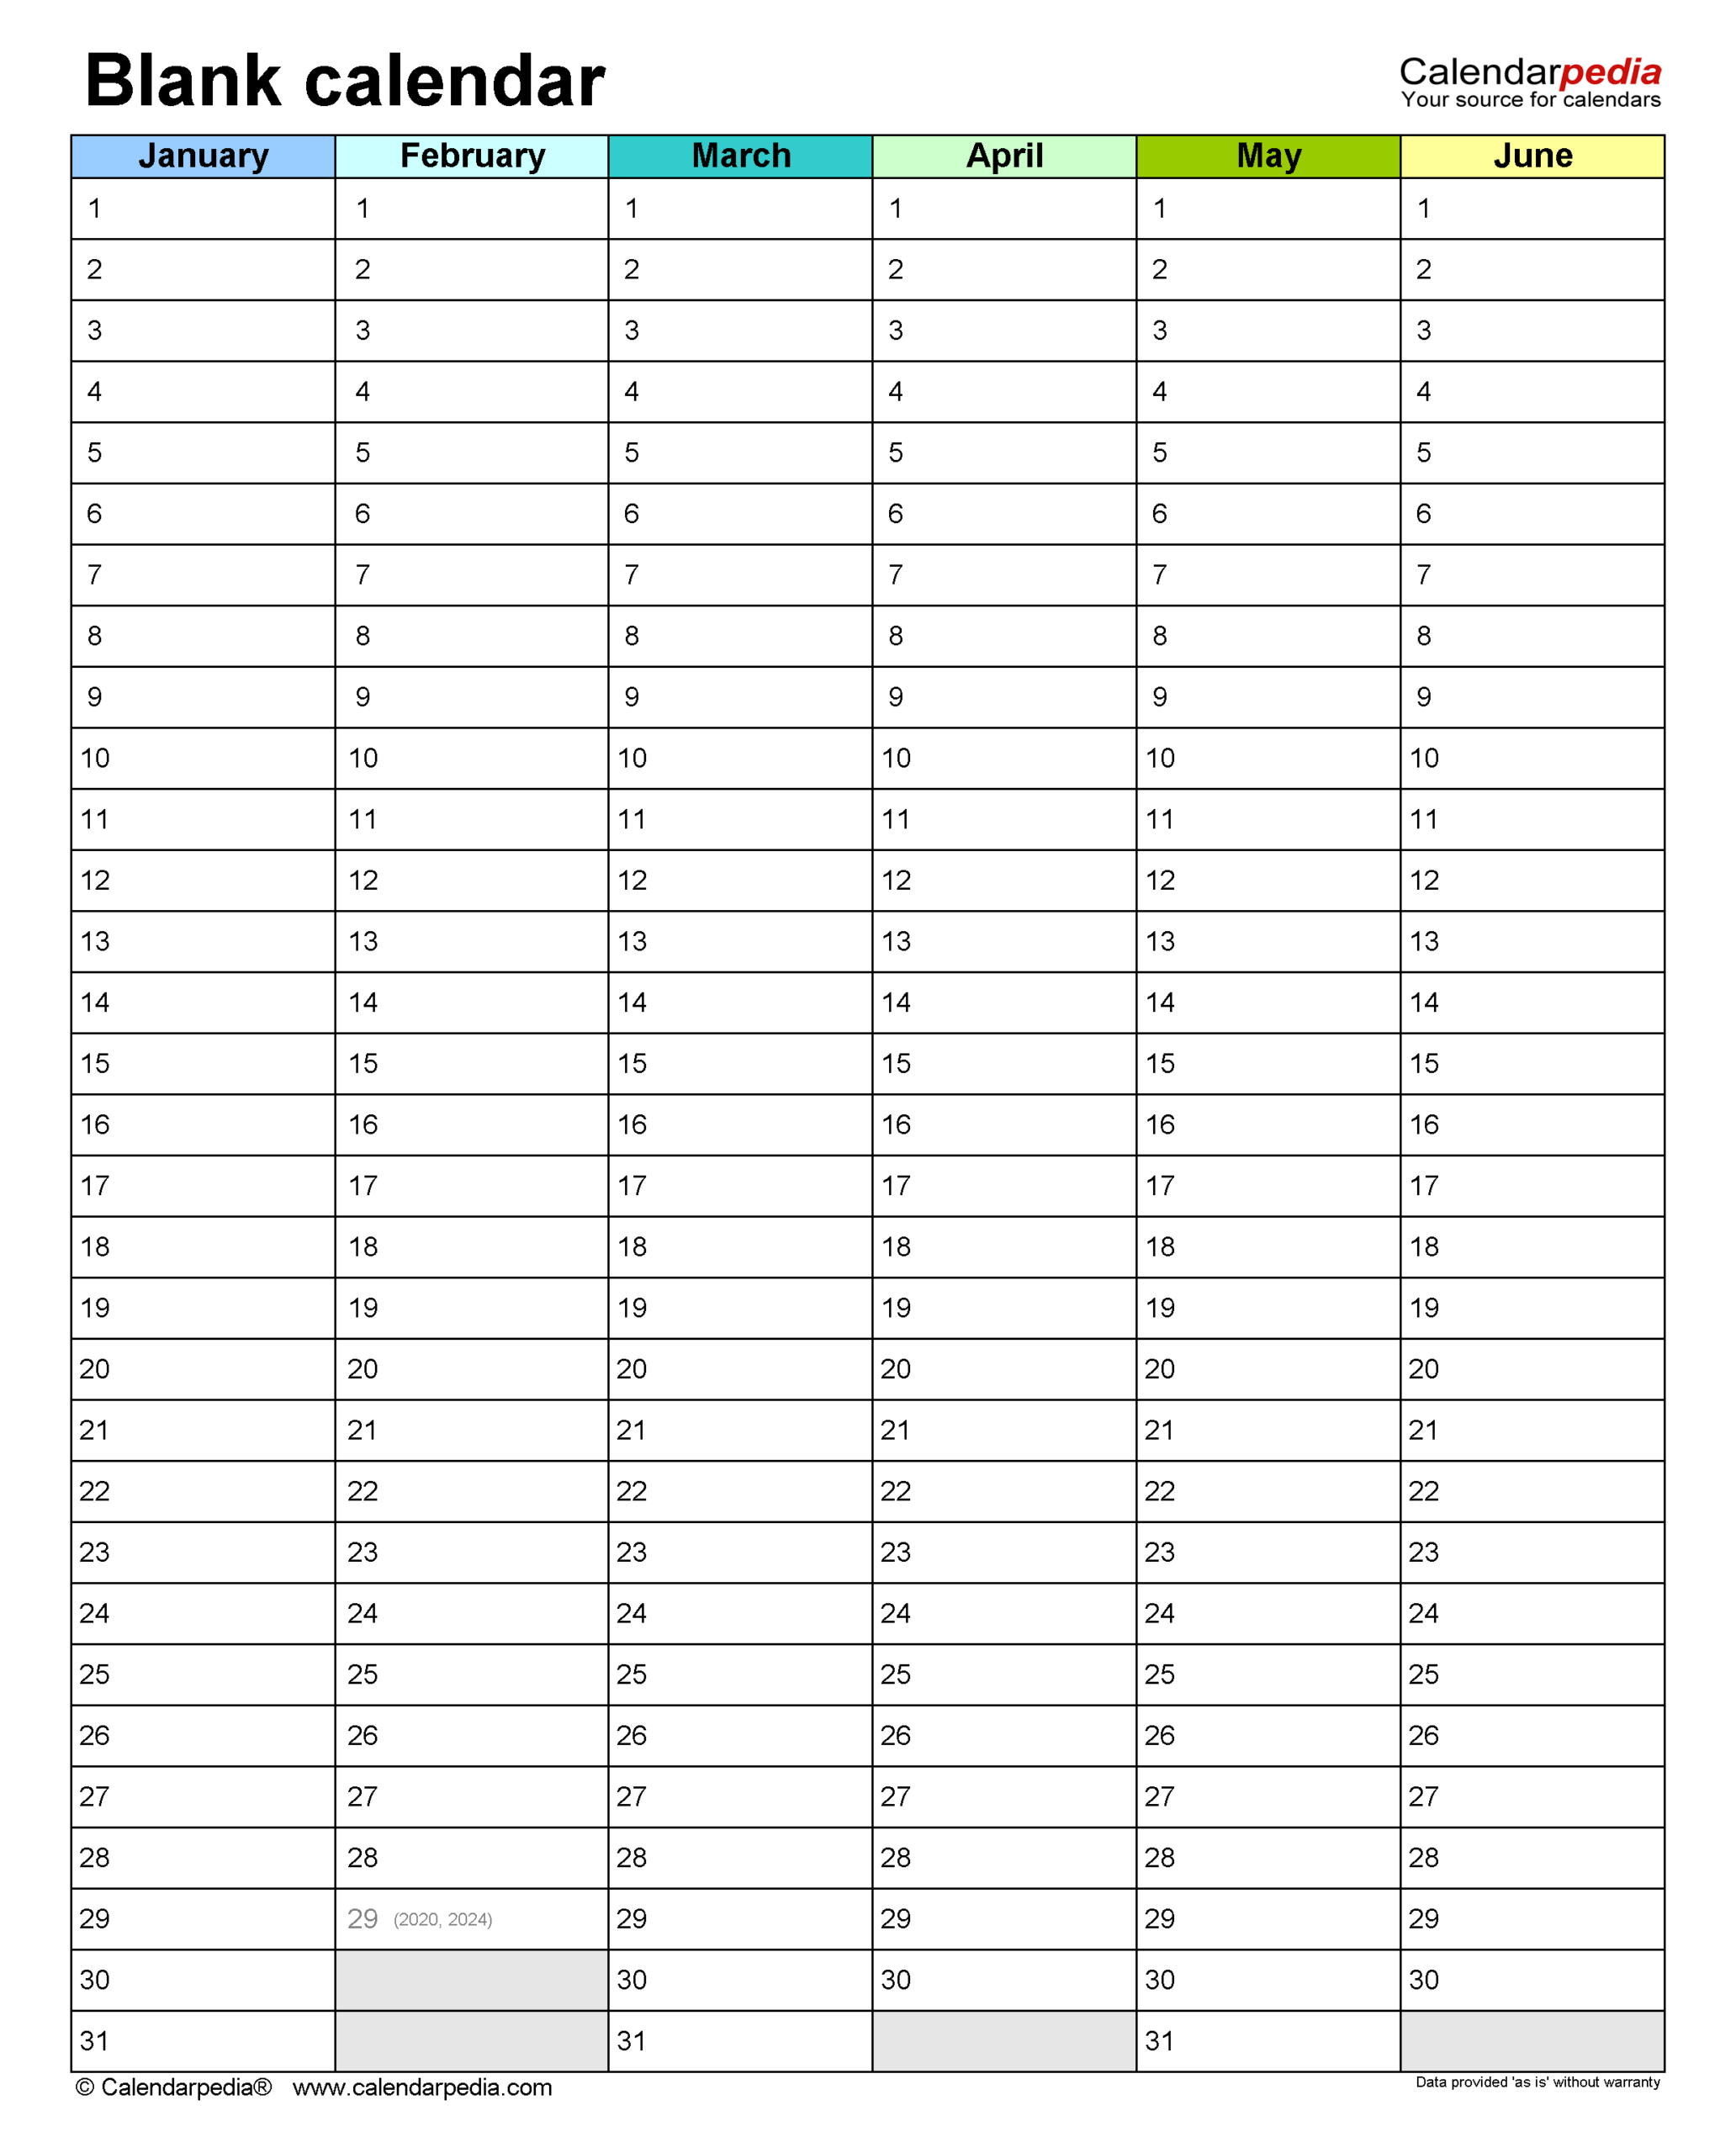 Blank Calendars  Free Printable Microsoft Excel Templates intended for Blank Printable Weekly Calendar